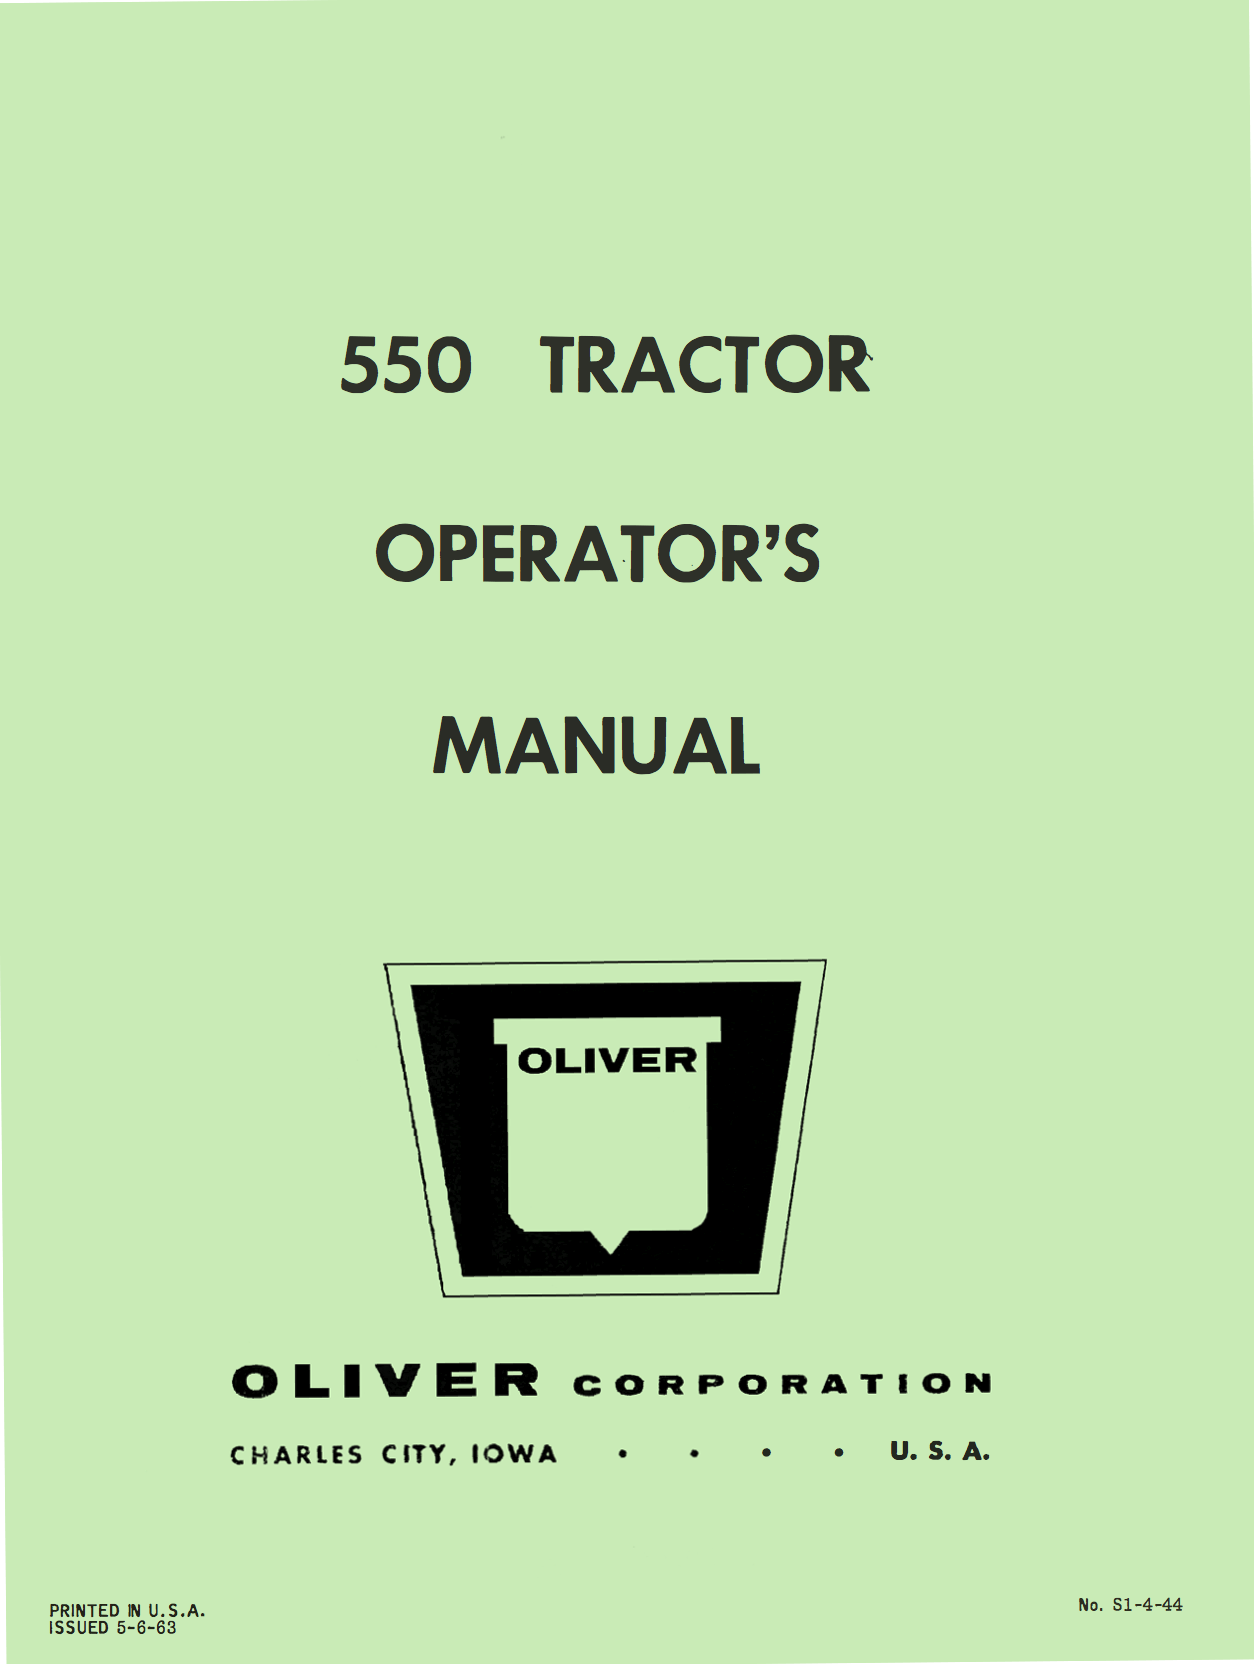 Oliver 550 Tractor - Operator's Manual - Ag Manuals - A Provider of Digital Farm Manuals - 1